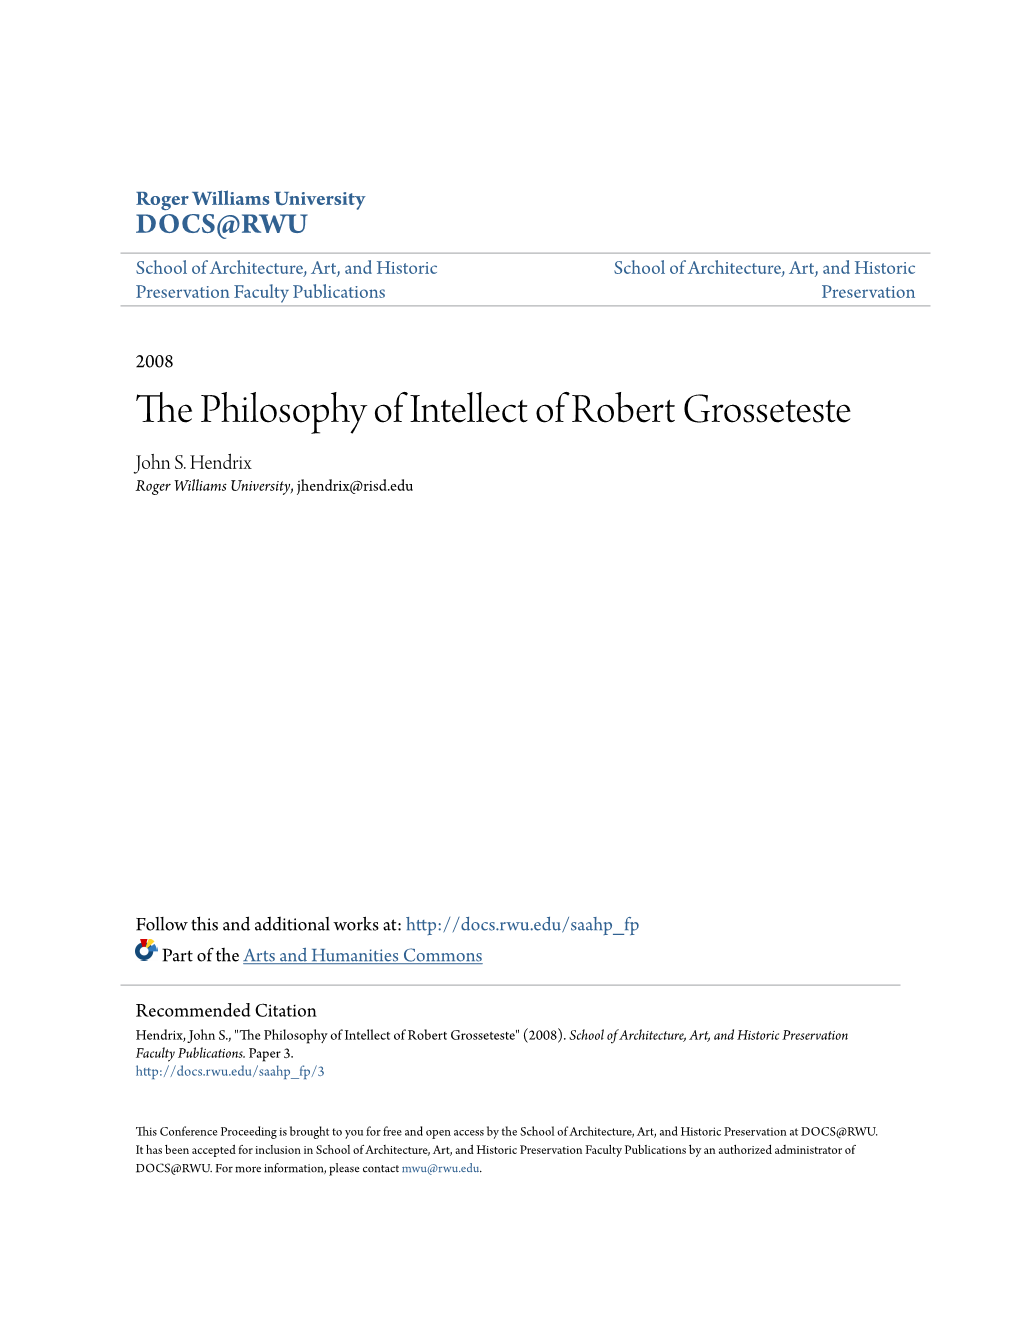 The Philosophy of Intellect of Robert Grosseteste